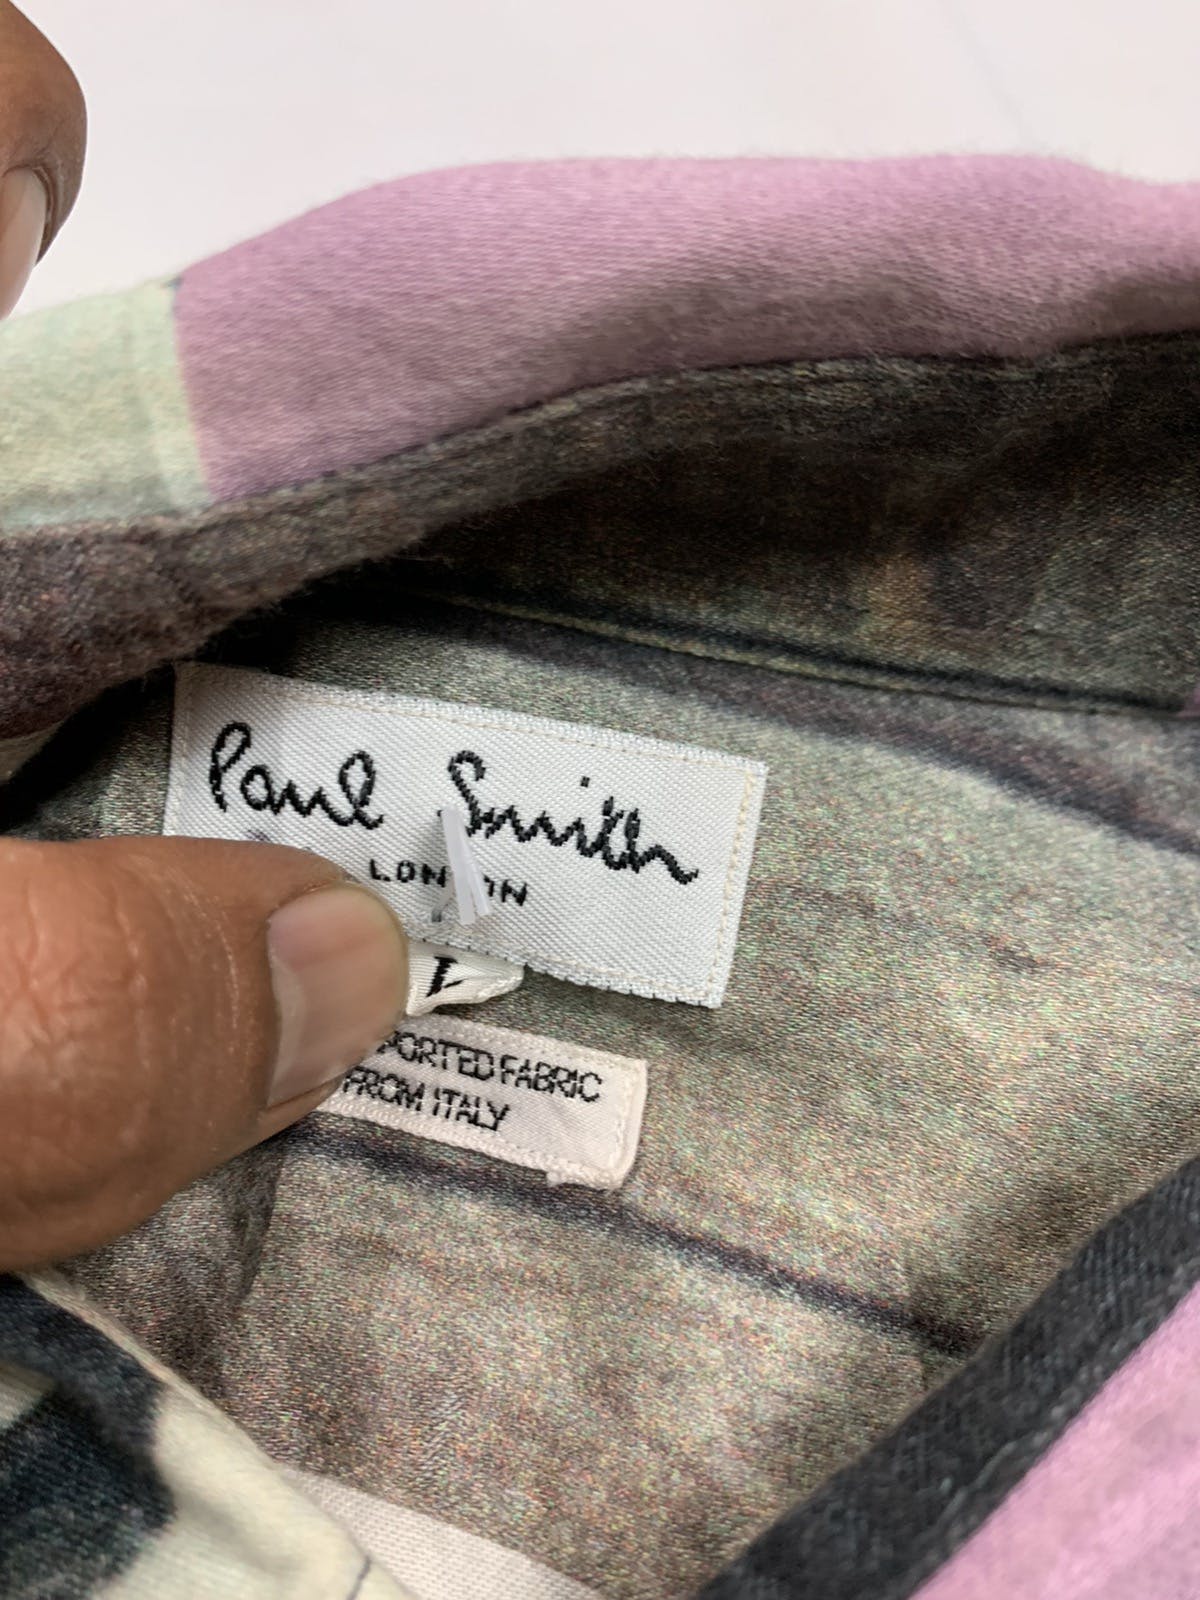 Paul smith overprint abdtract shirt button down - 5